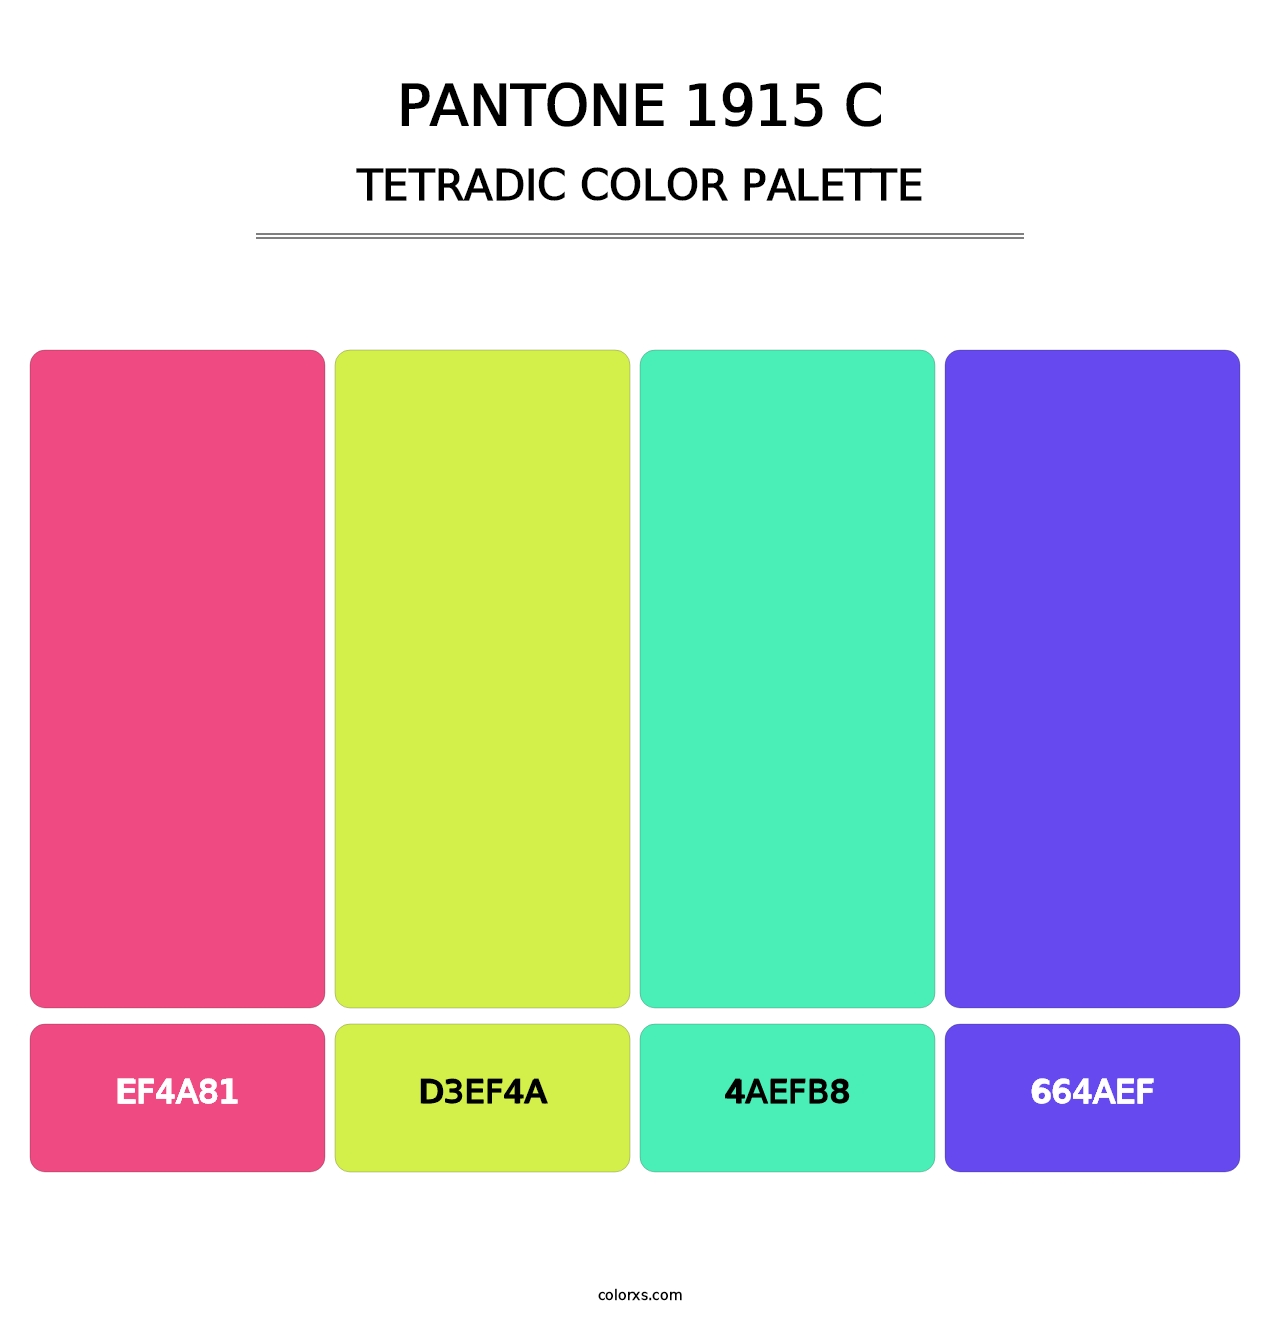 PANTONE 1915 C - Tetradic Color Palette